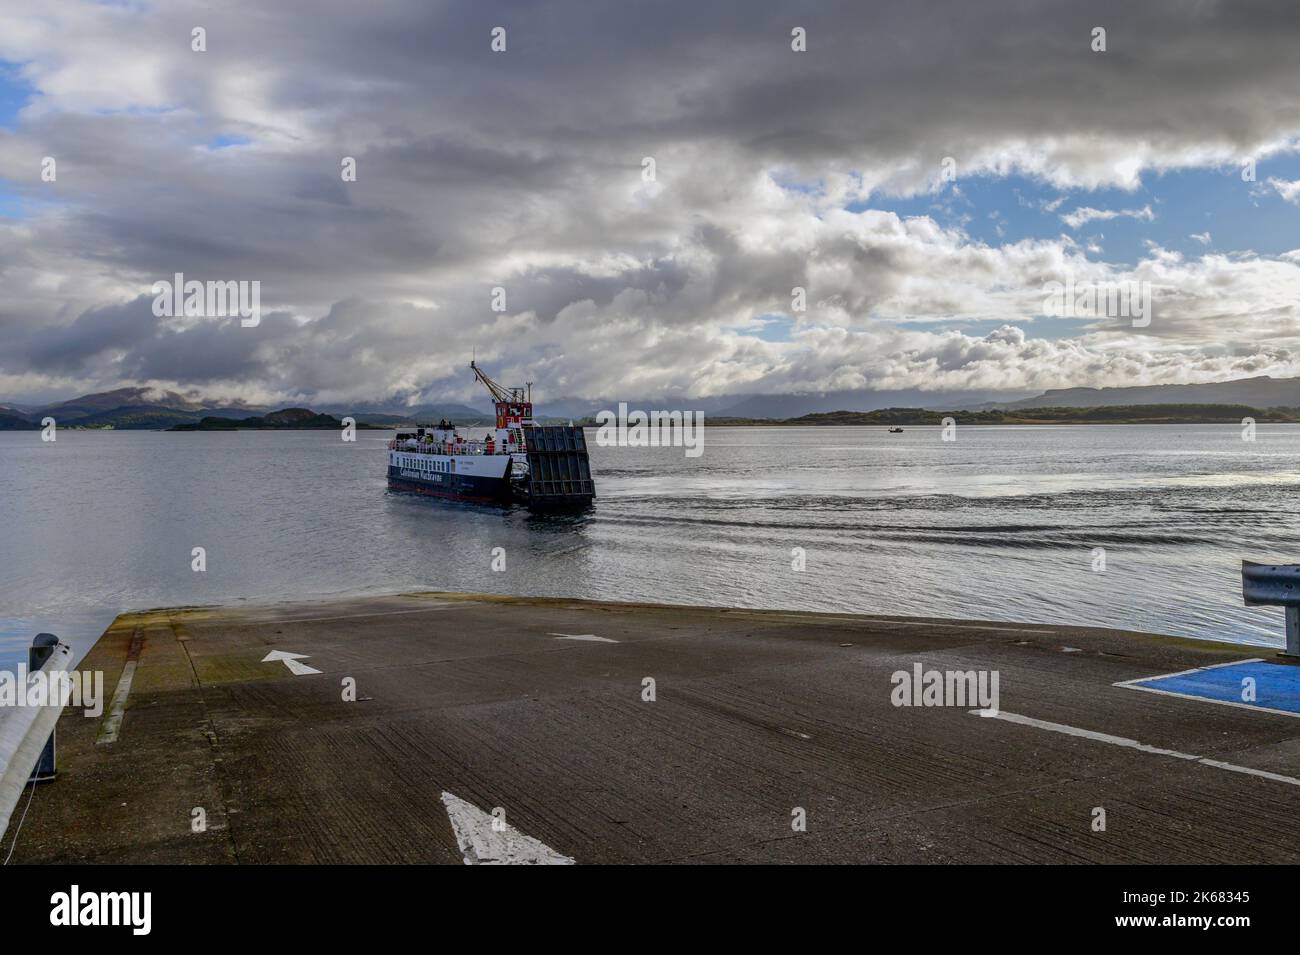 The morning ferry from Oban landing at Achnacroish on The Isle of Lismore, Argyll, Scotland Stock Photo